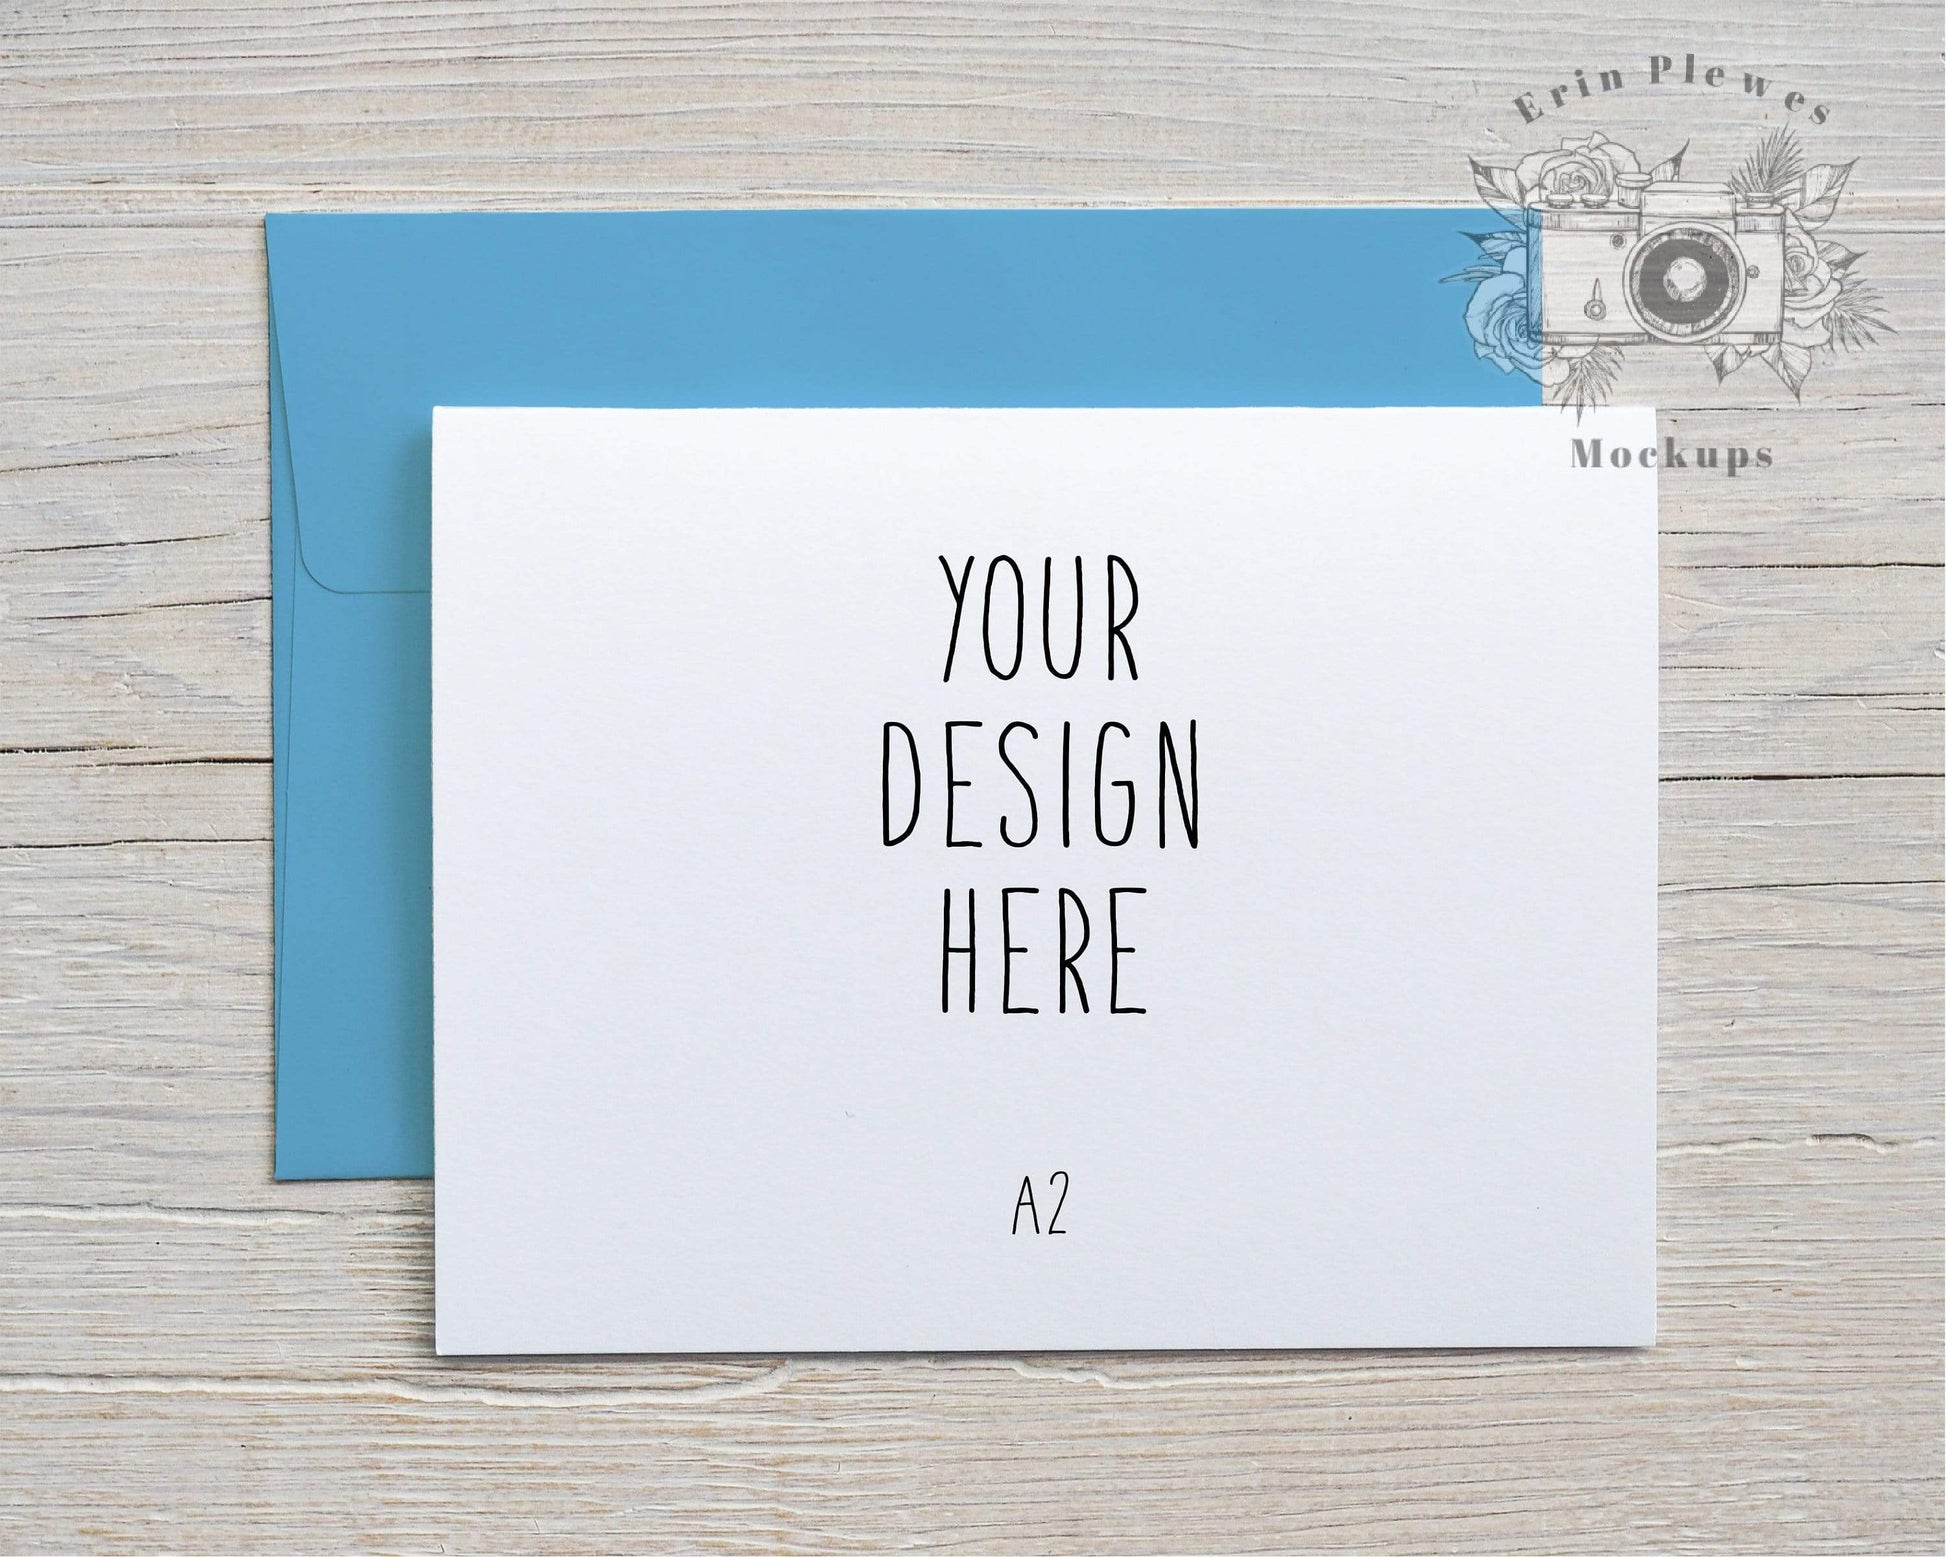 Erin Plewes Mockups A2 Card mockup with bright blue envelope, Thank you card and envelope mock up, Birthday card mock-up, Jpeg Instant Digital Download